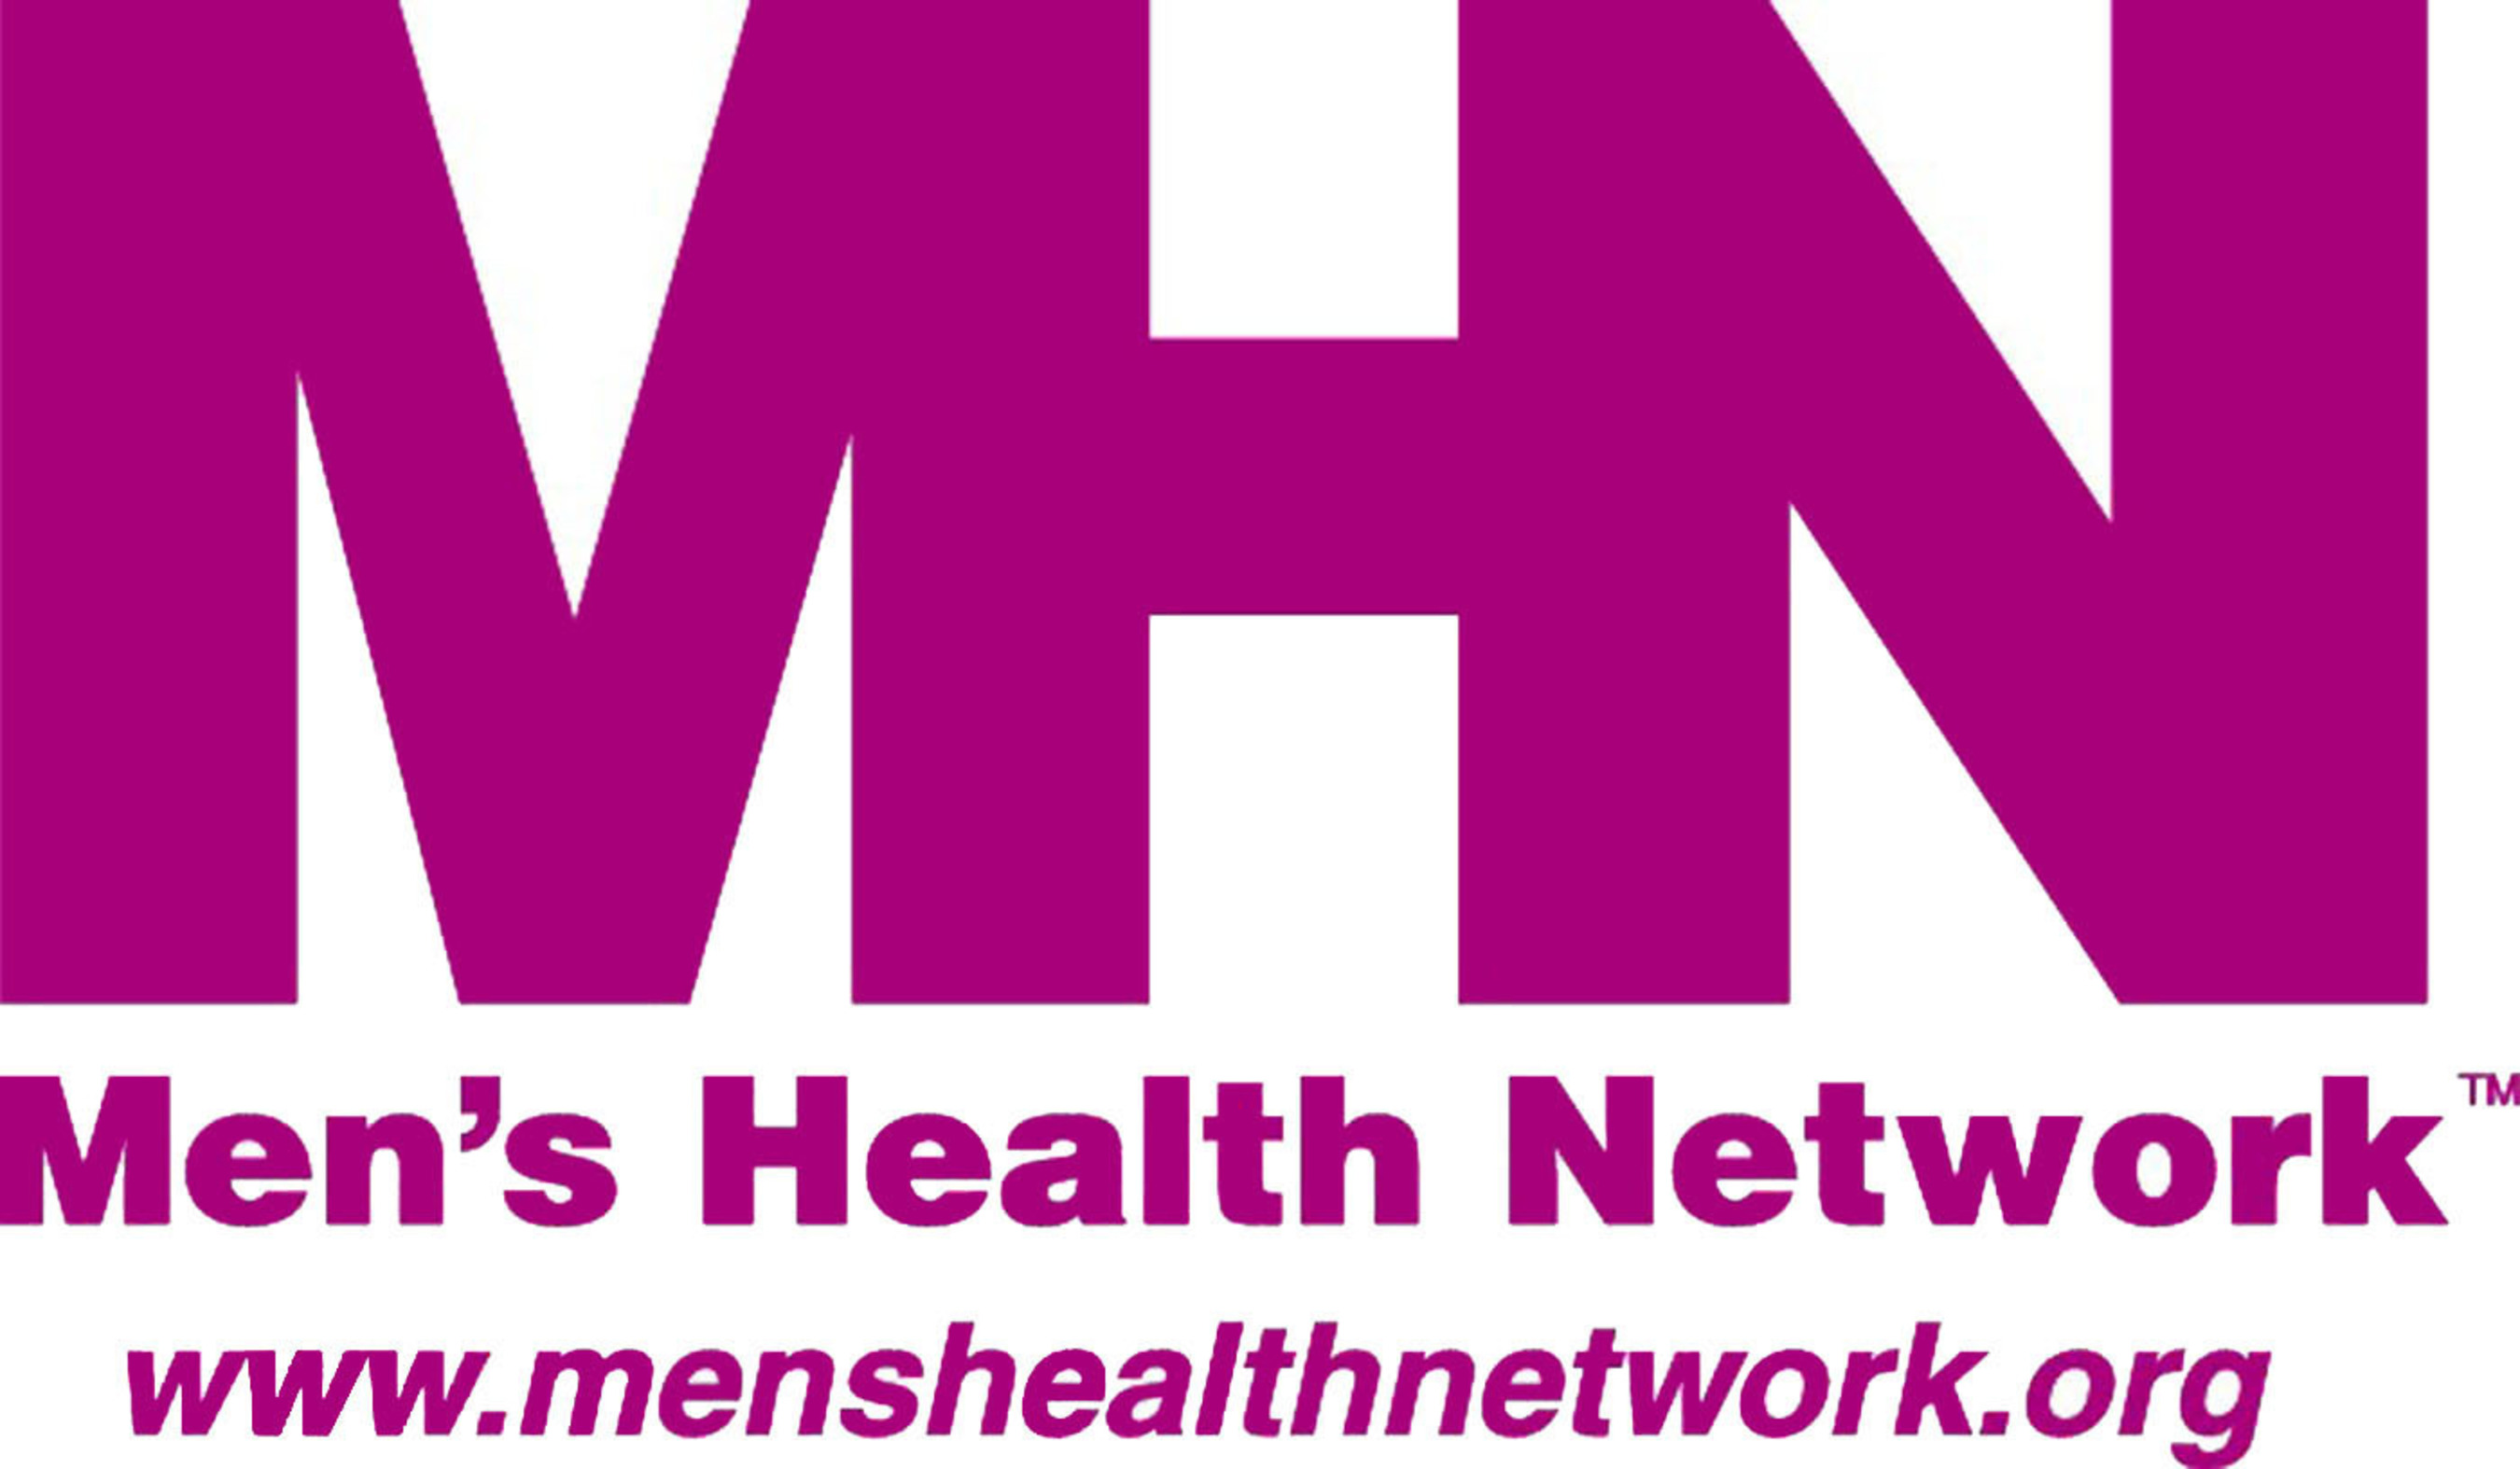 Men's Health Network -- Washington, DC. (PRNewsFoto/Men's Health Network) (PRNewsFoto/)